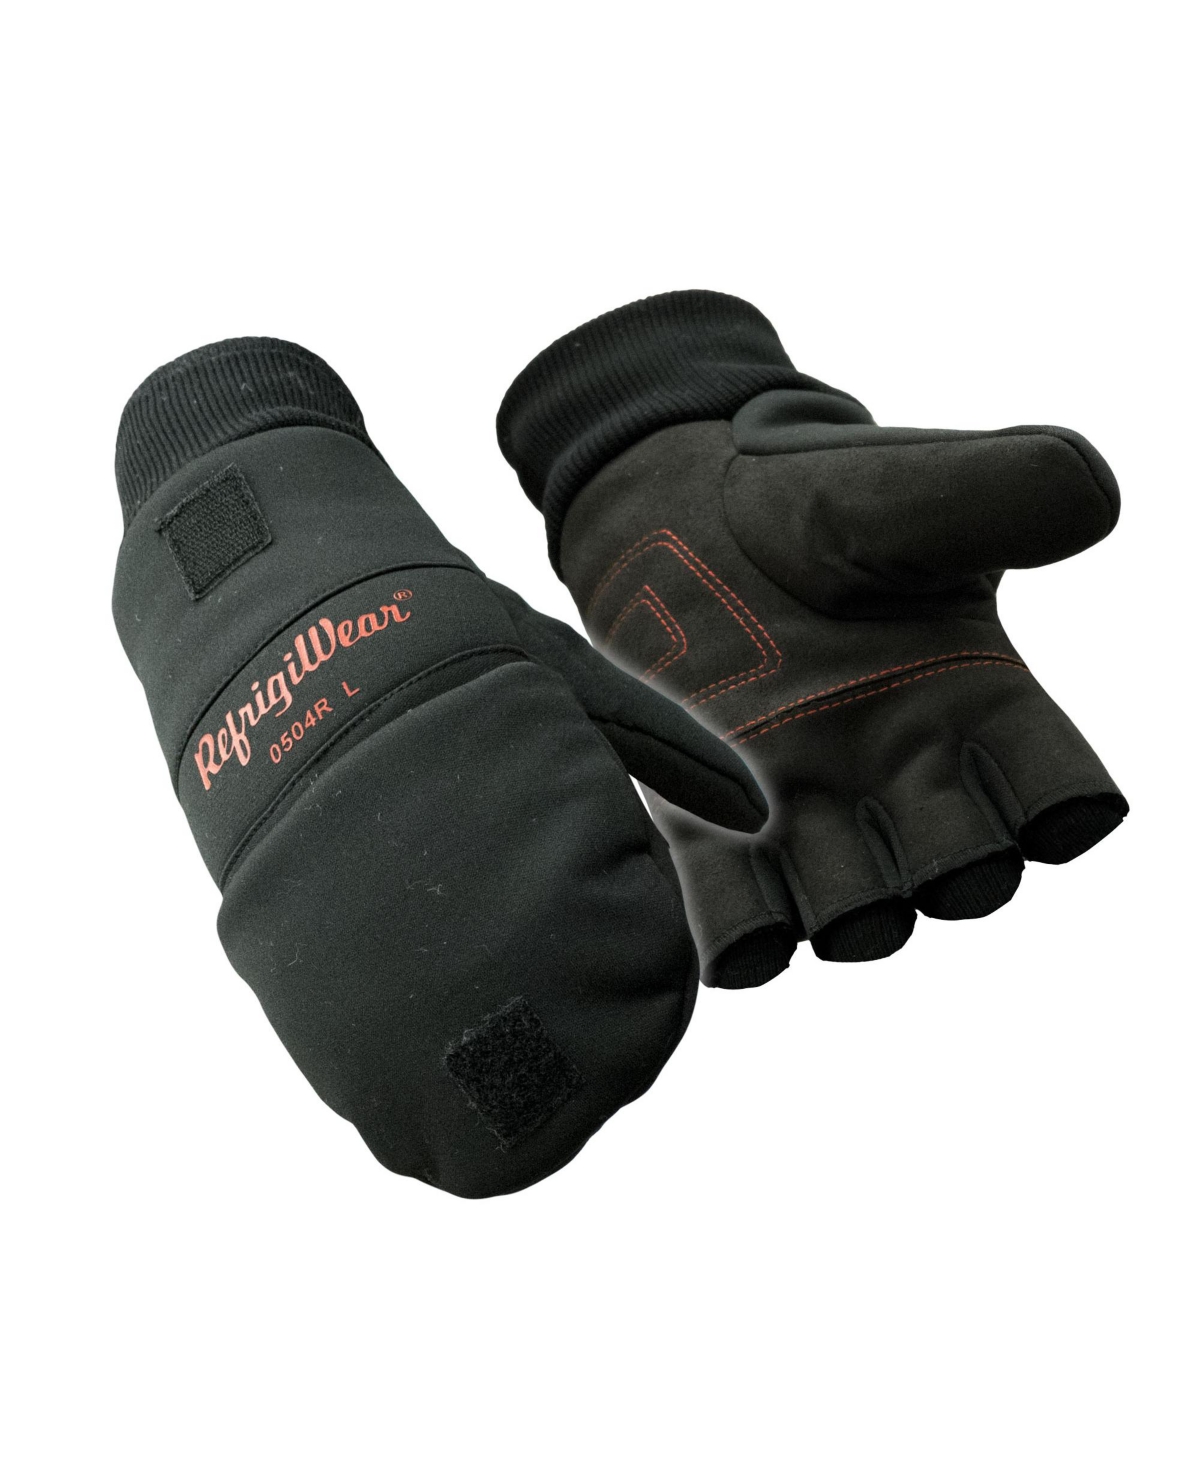 Men's Fleece Lined Fiberfill Insulated Softshell Convertible Mitten Gloves - Black